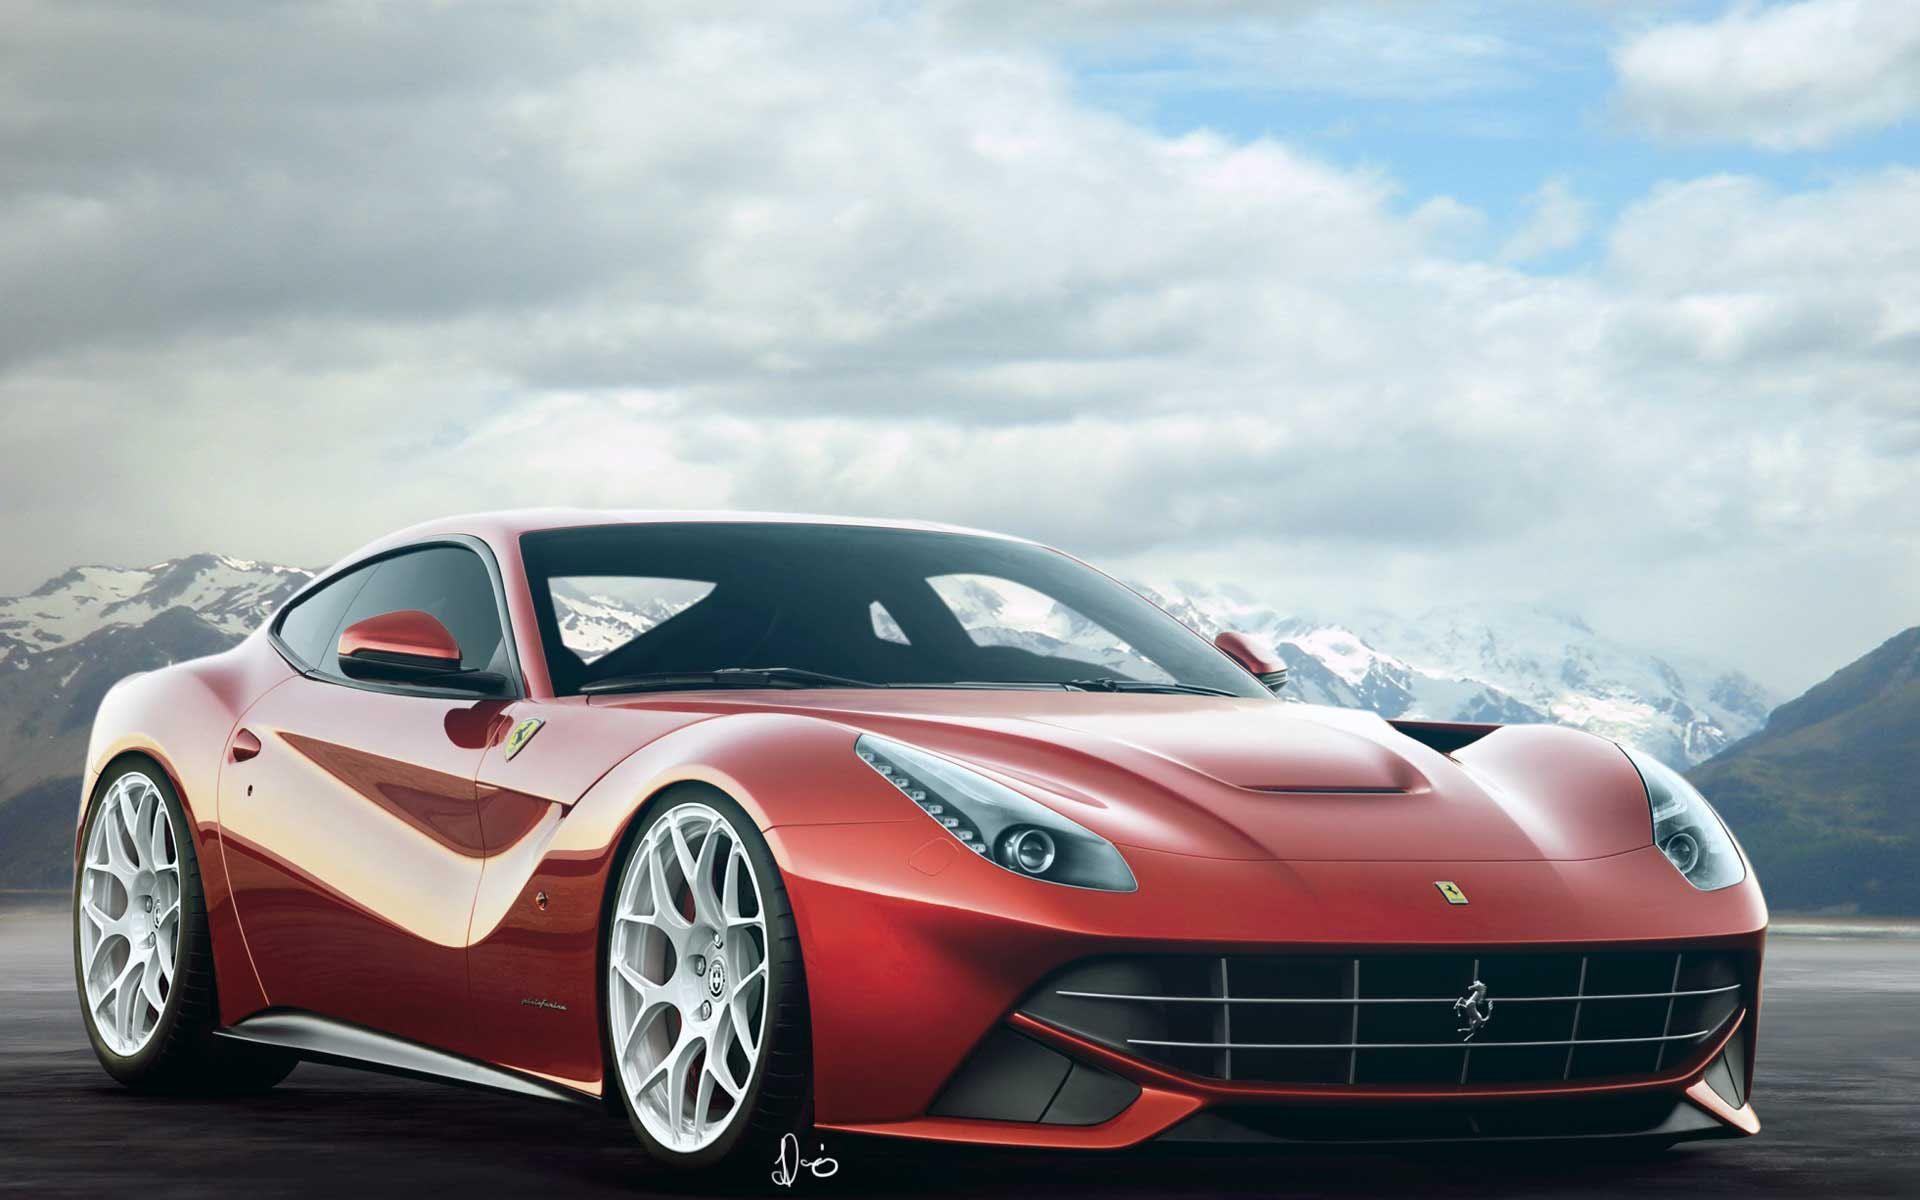 Ferrari f12 berlinetta HD wallpaper high resolution download